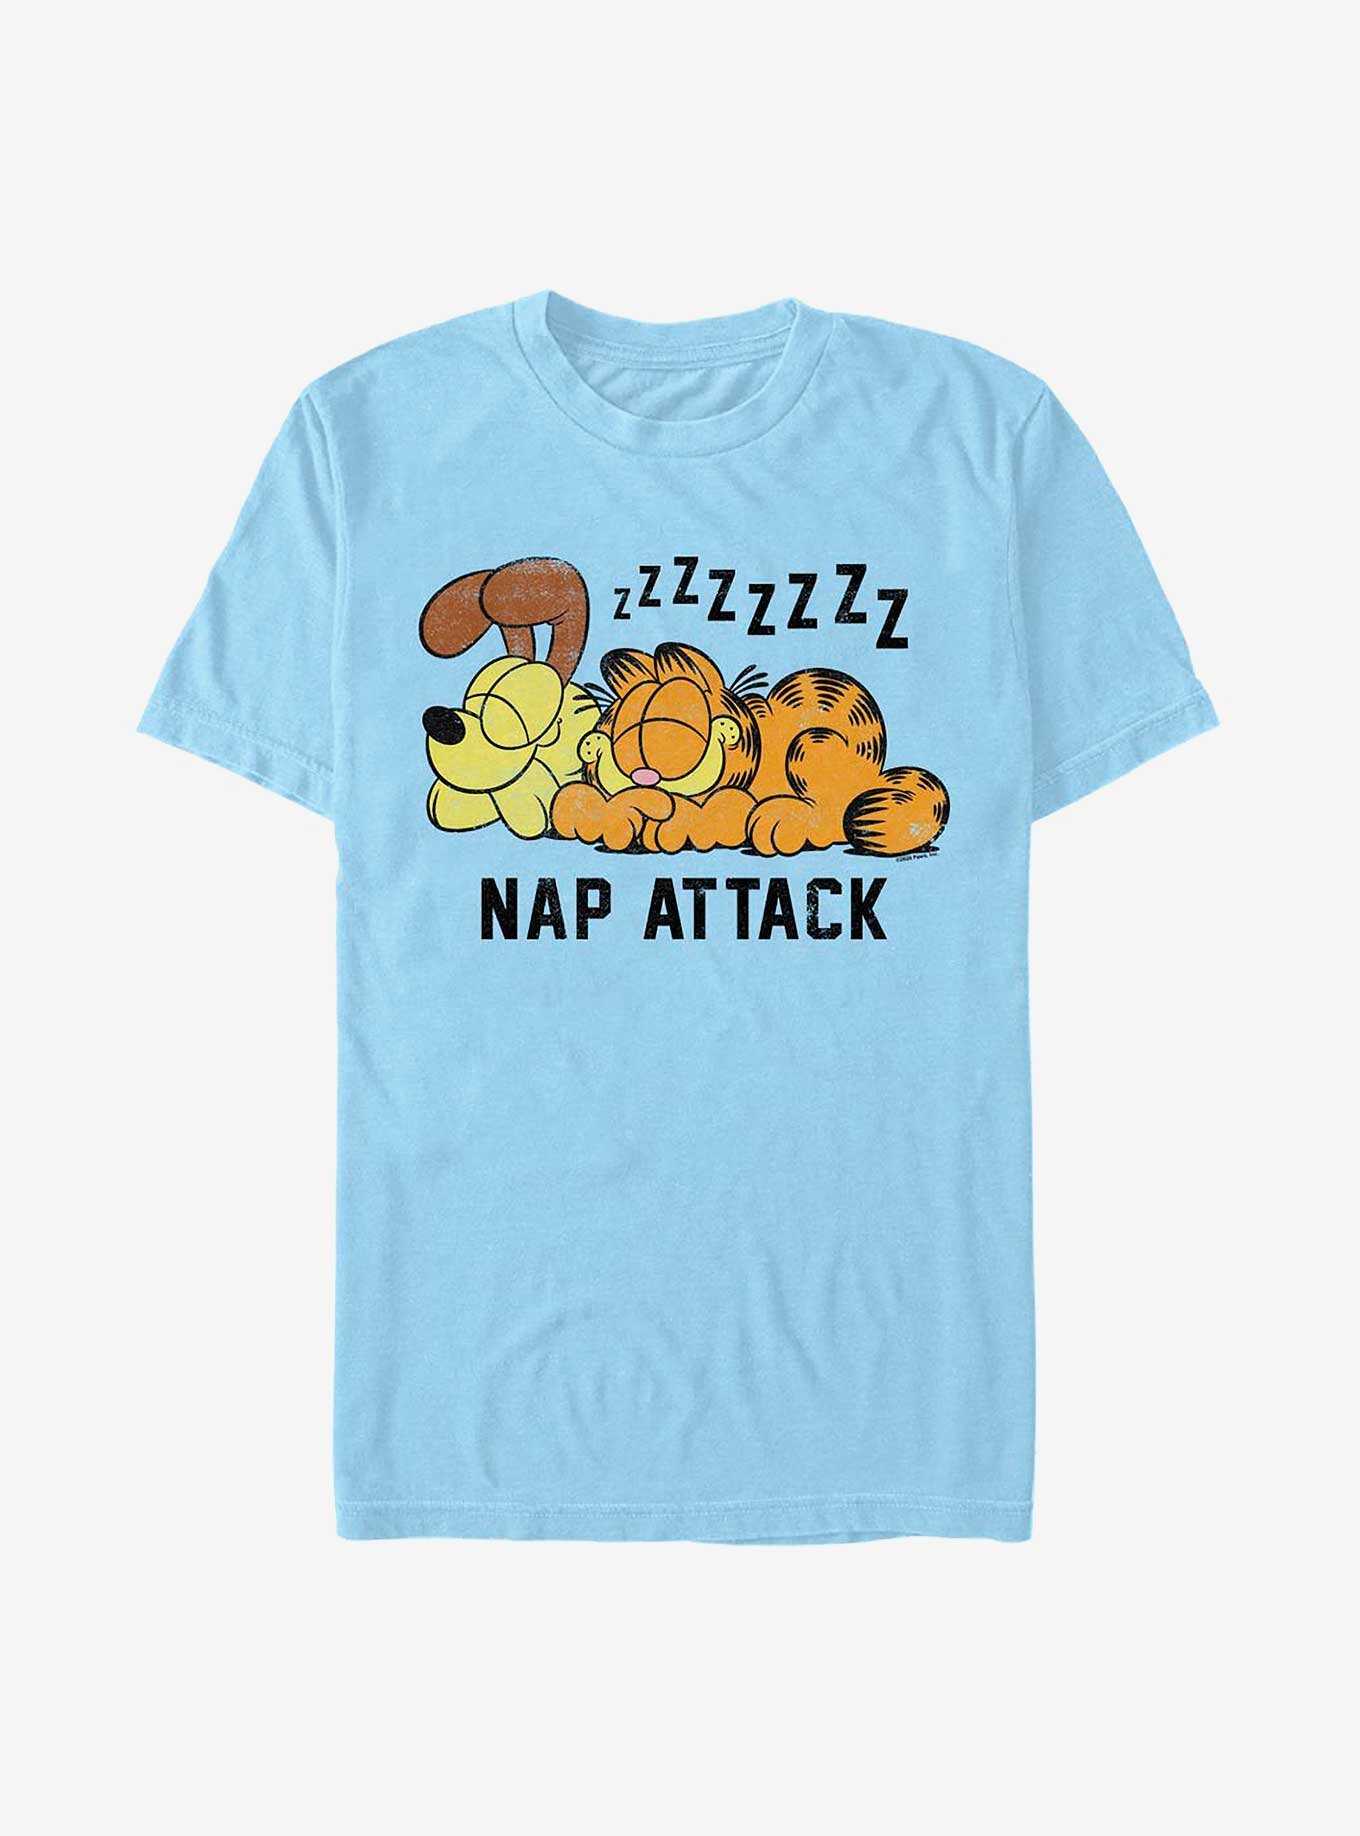 Garfield and Odie Nap Attack T-Shirt, , hi-res